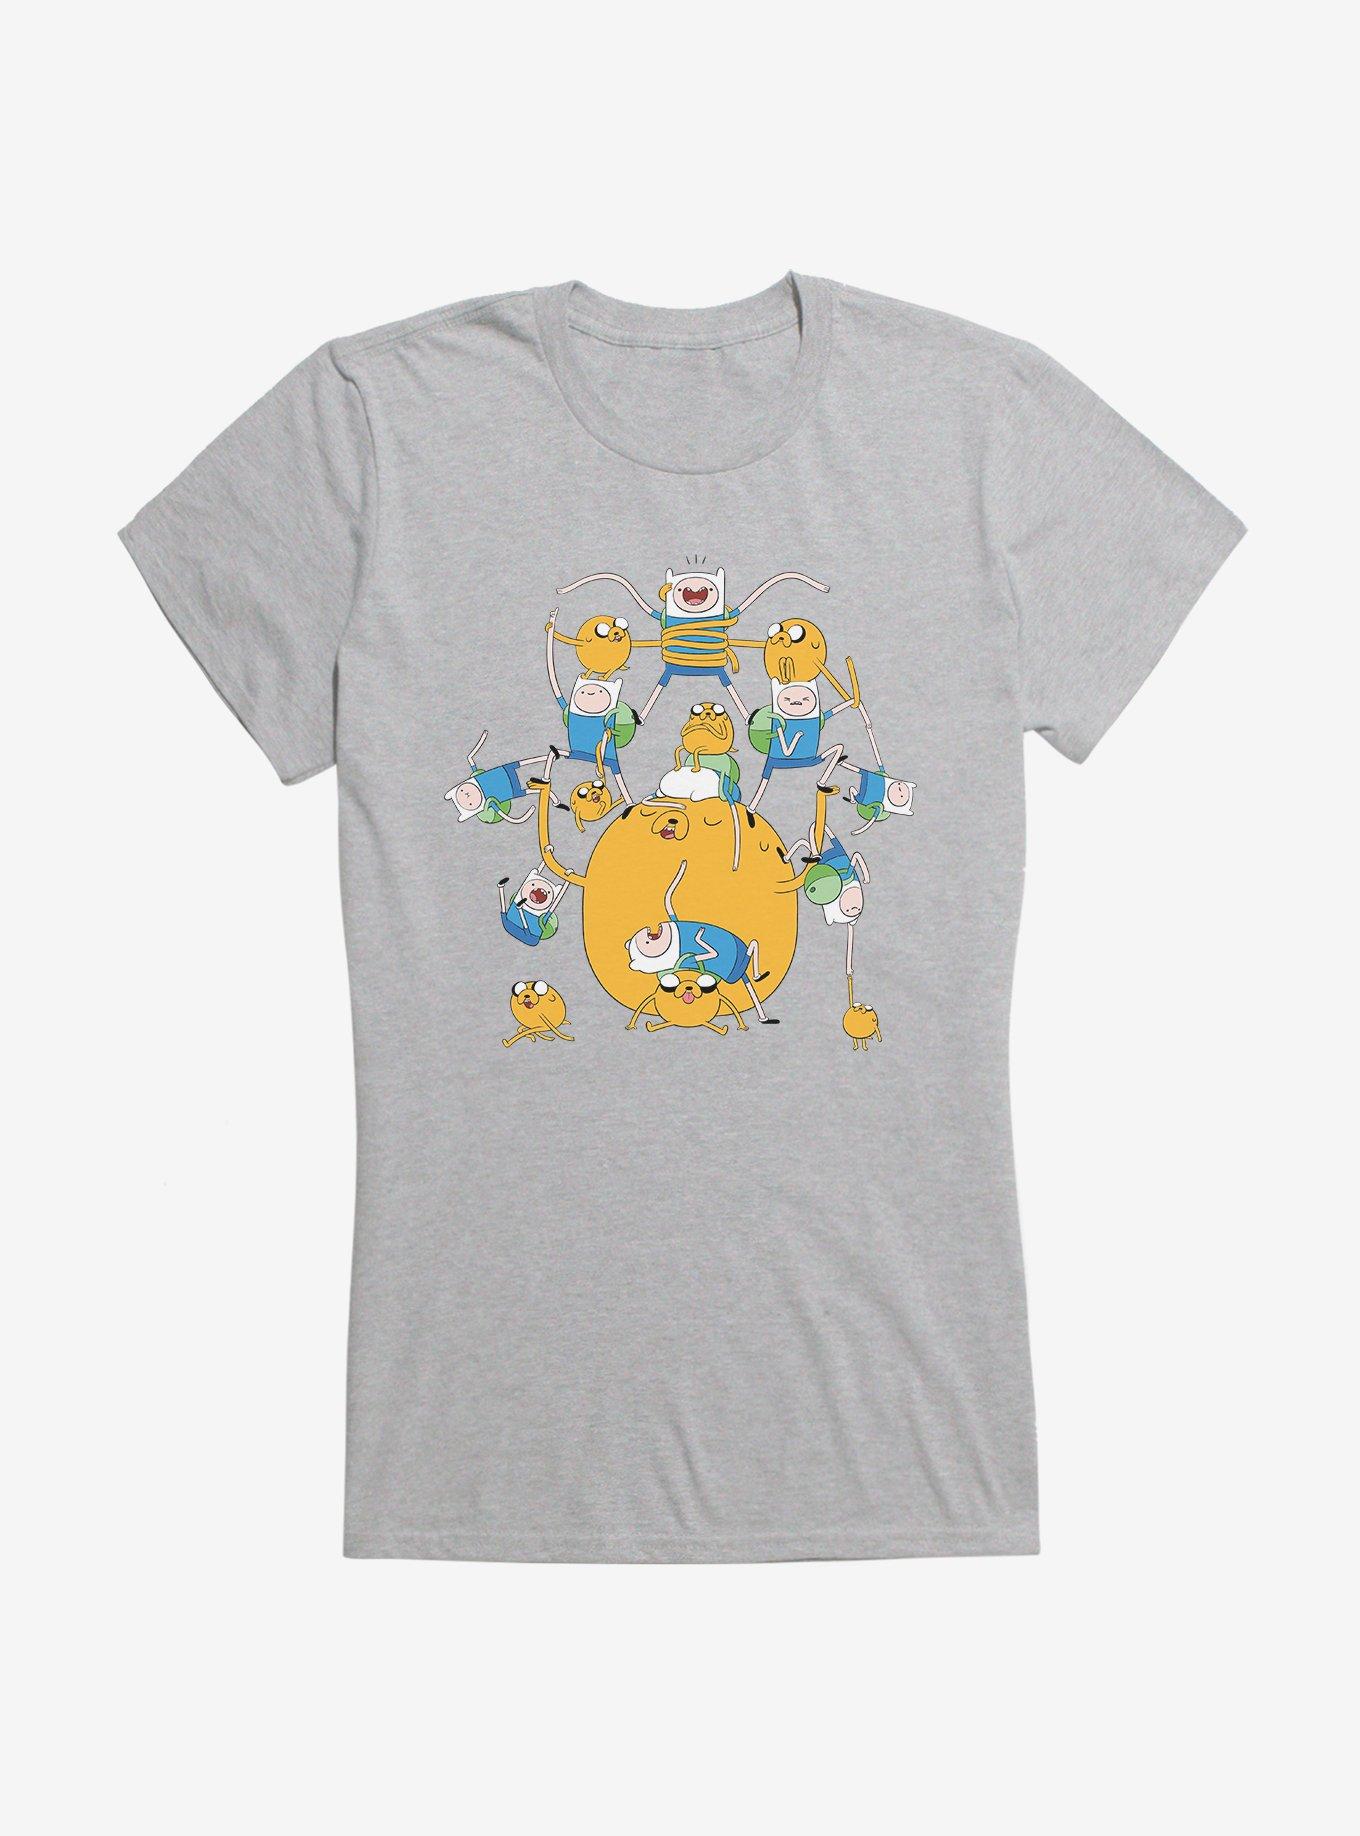 Adventure Time Finn And Jake Multiples Girls T-Shirt